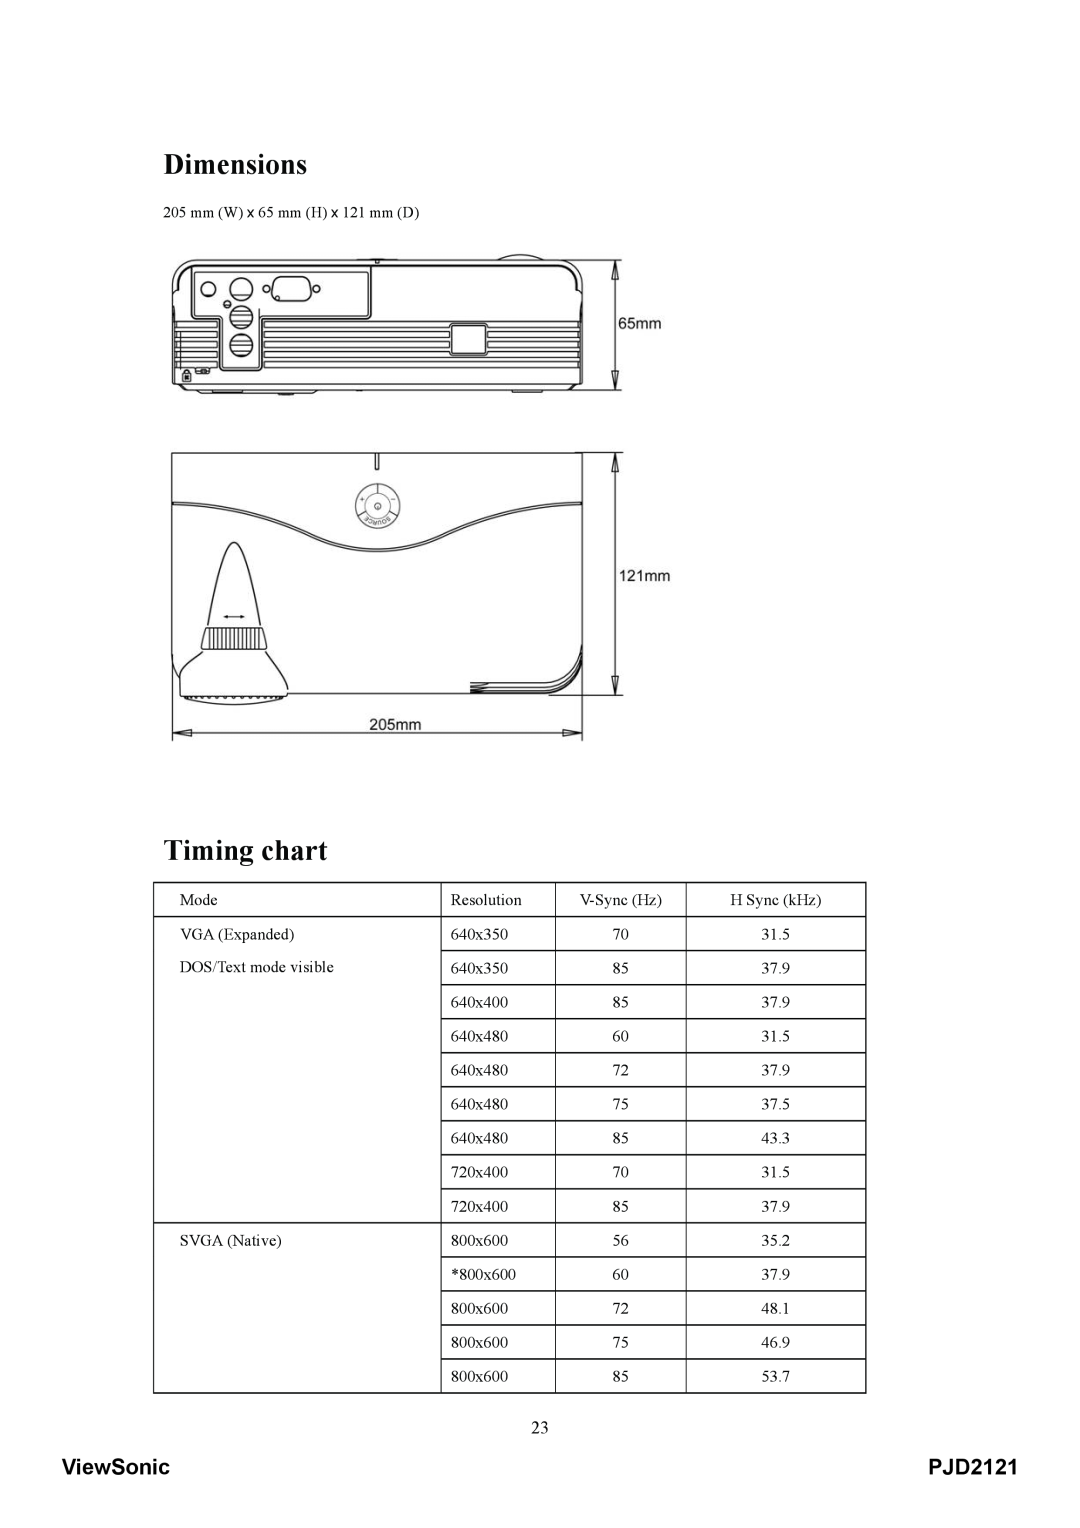 ViewSonic VS12617 manual Dimensions, Timing chart, ViewSonic, PJD2121 